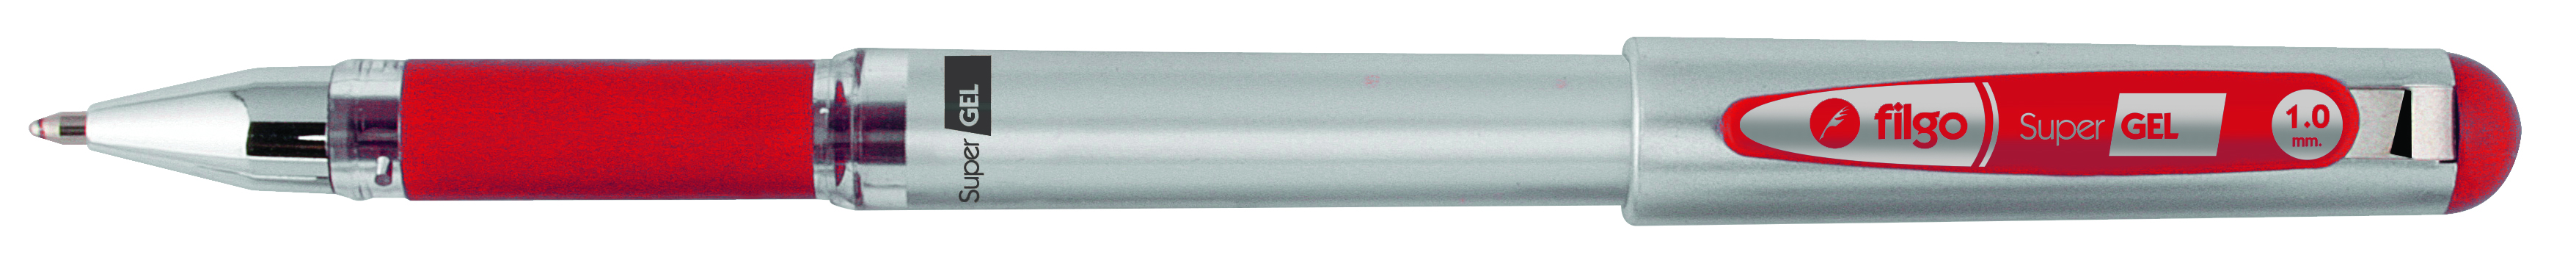 BOLIGRAFO FILGO ROLLER SUPER GEL 1.0MM X12 . (SG10-C12)